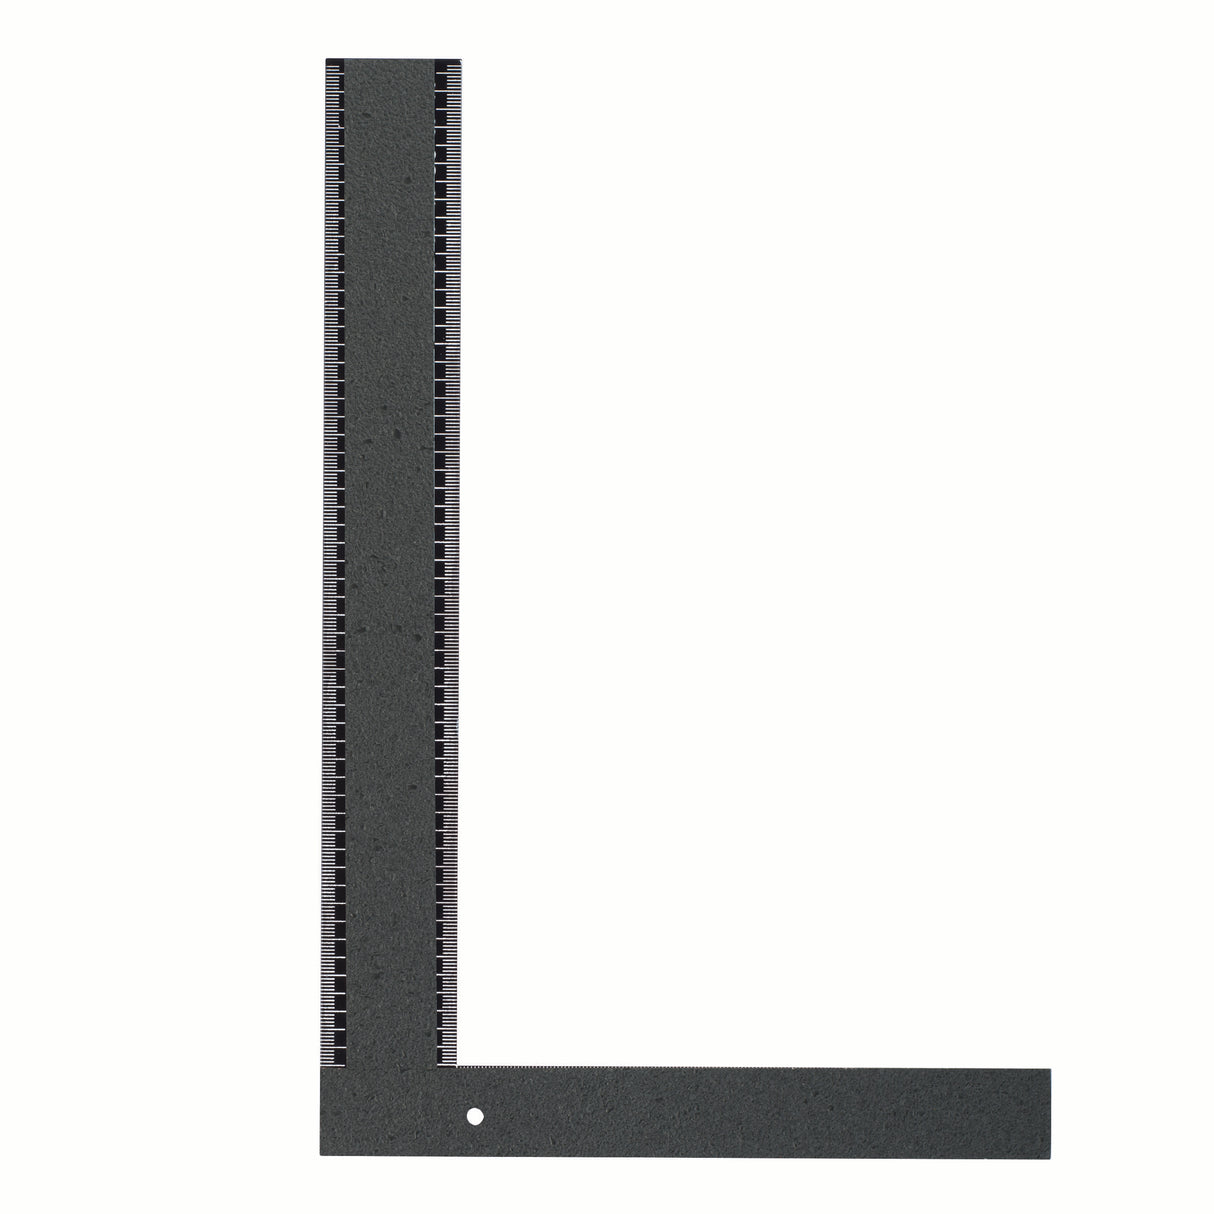 12" x 8" Steel Square with Non-Slip Tape